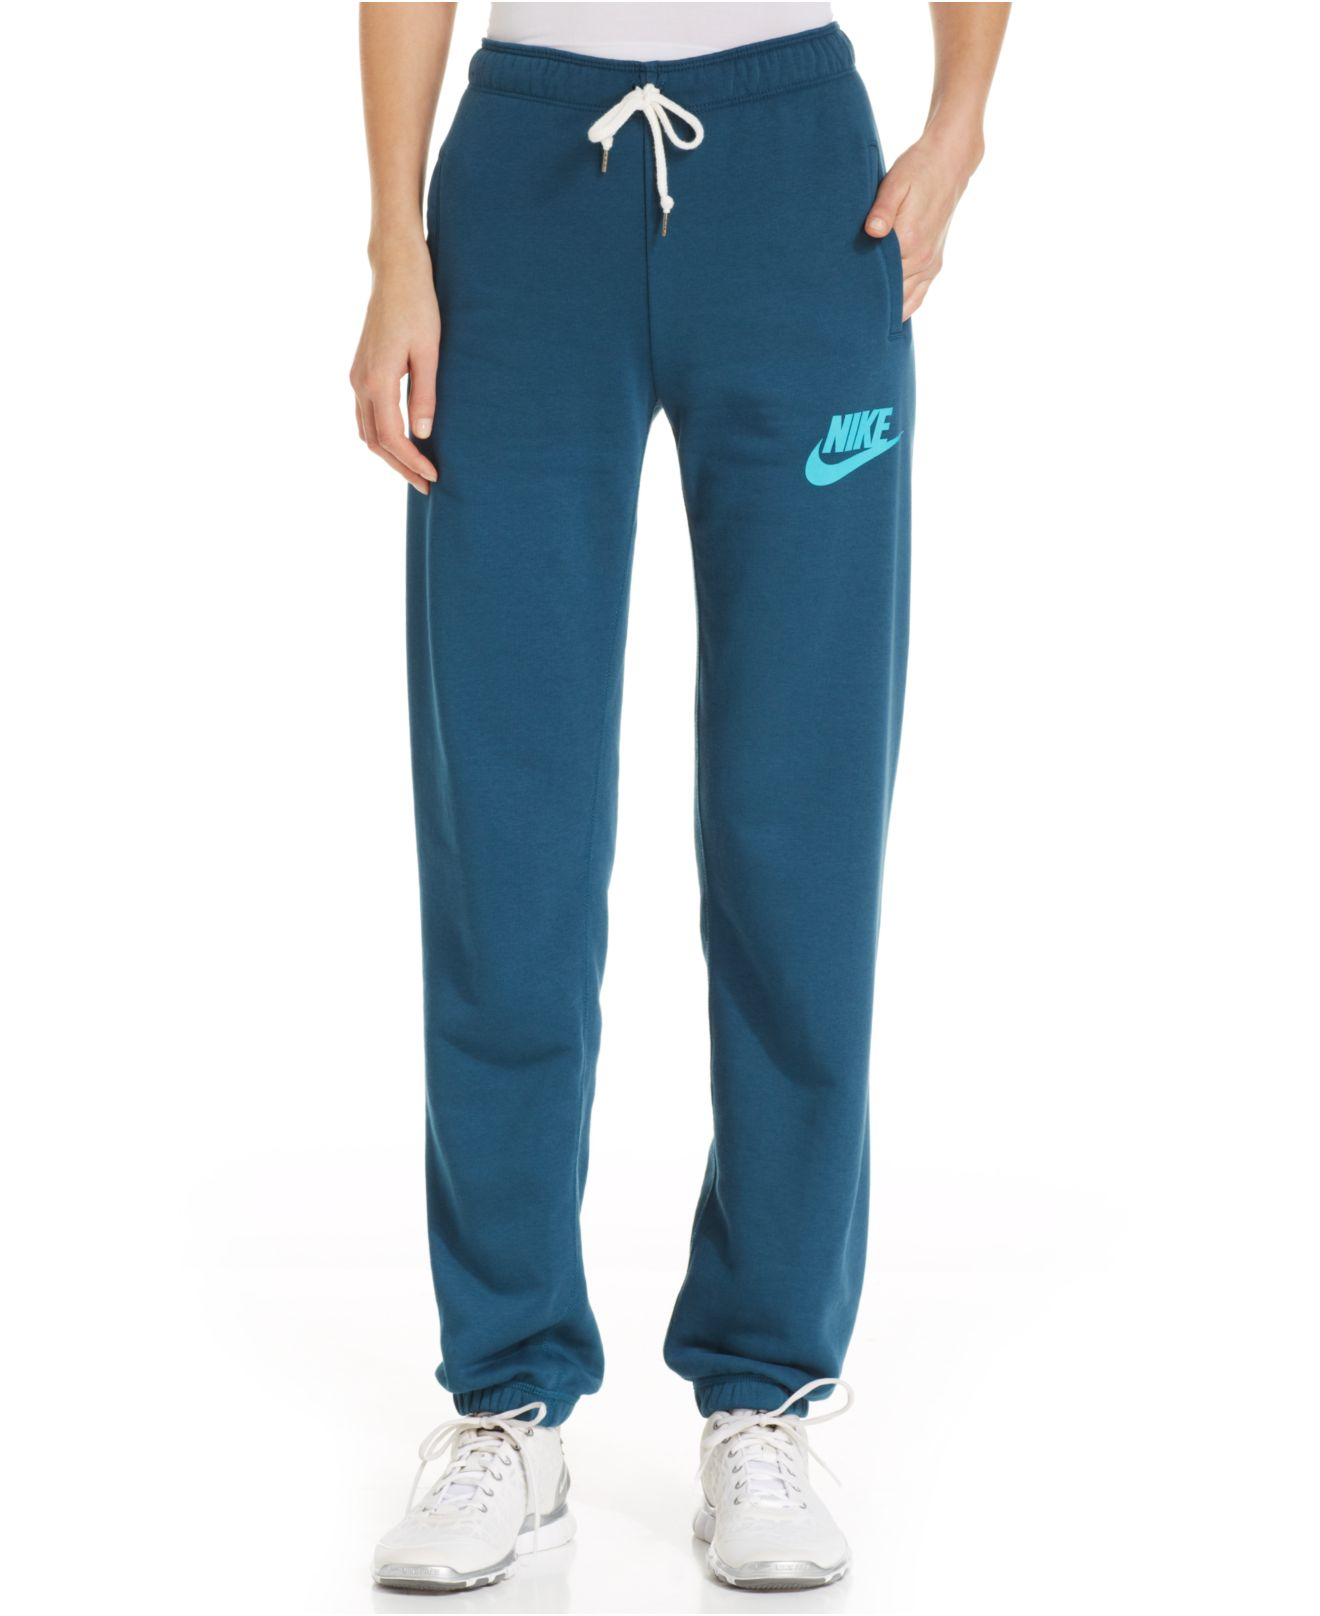 Lyst - Nike Rally Straight-Leg Sweatpants in Blue